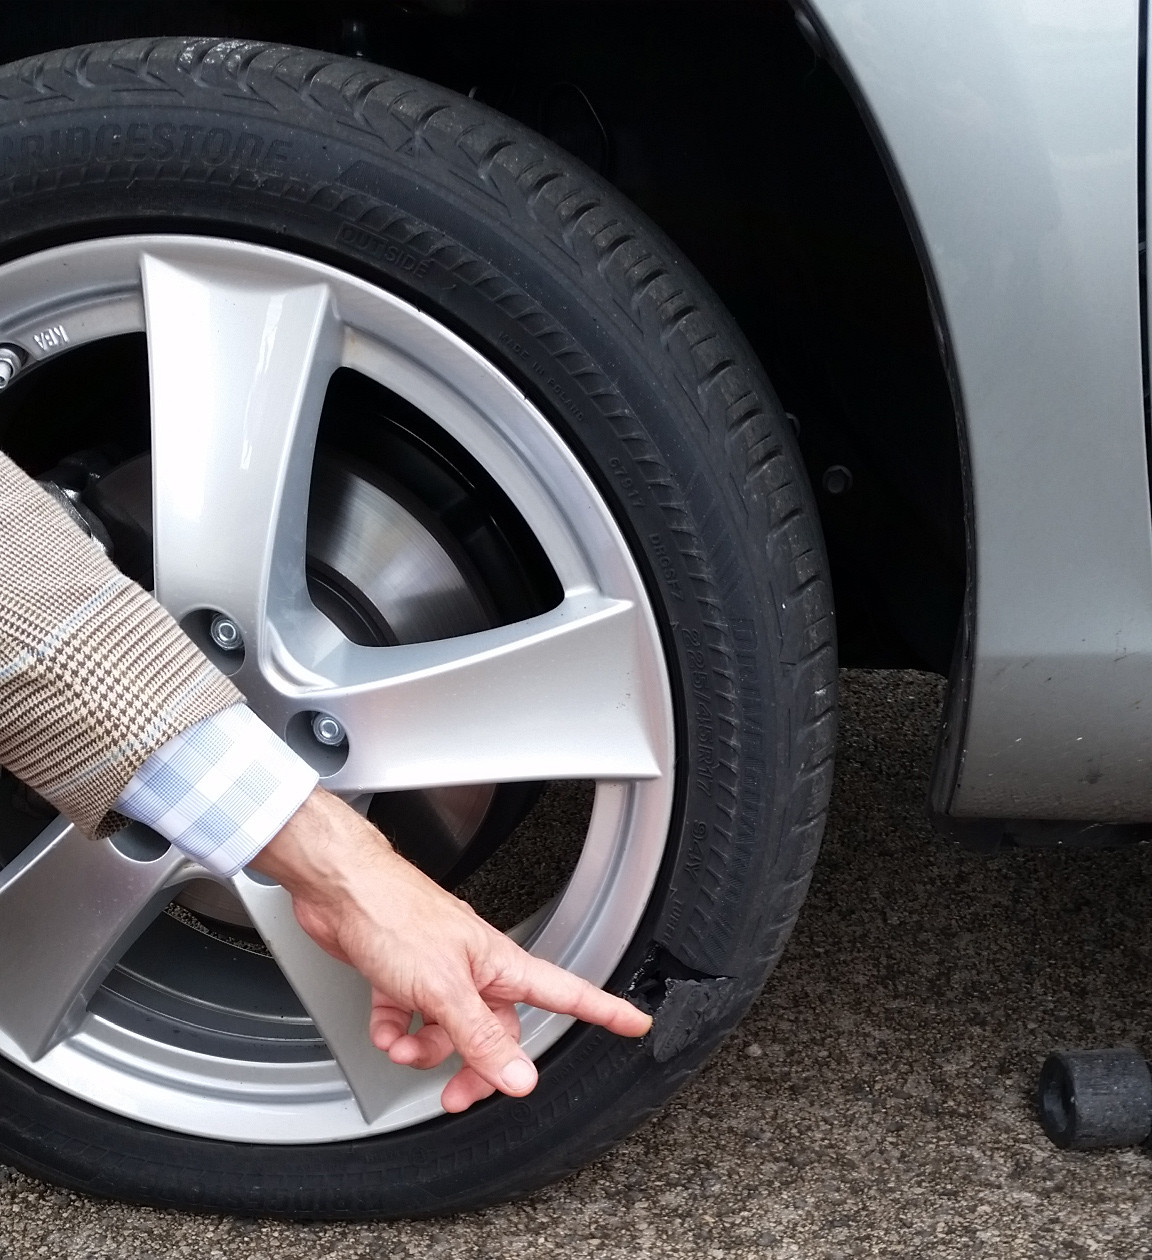 nyhed løn Breddegrad Ny type dæk: Slip for risikoen og bøvlet ved at punktere - Broenderslev Avis